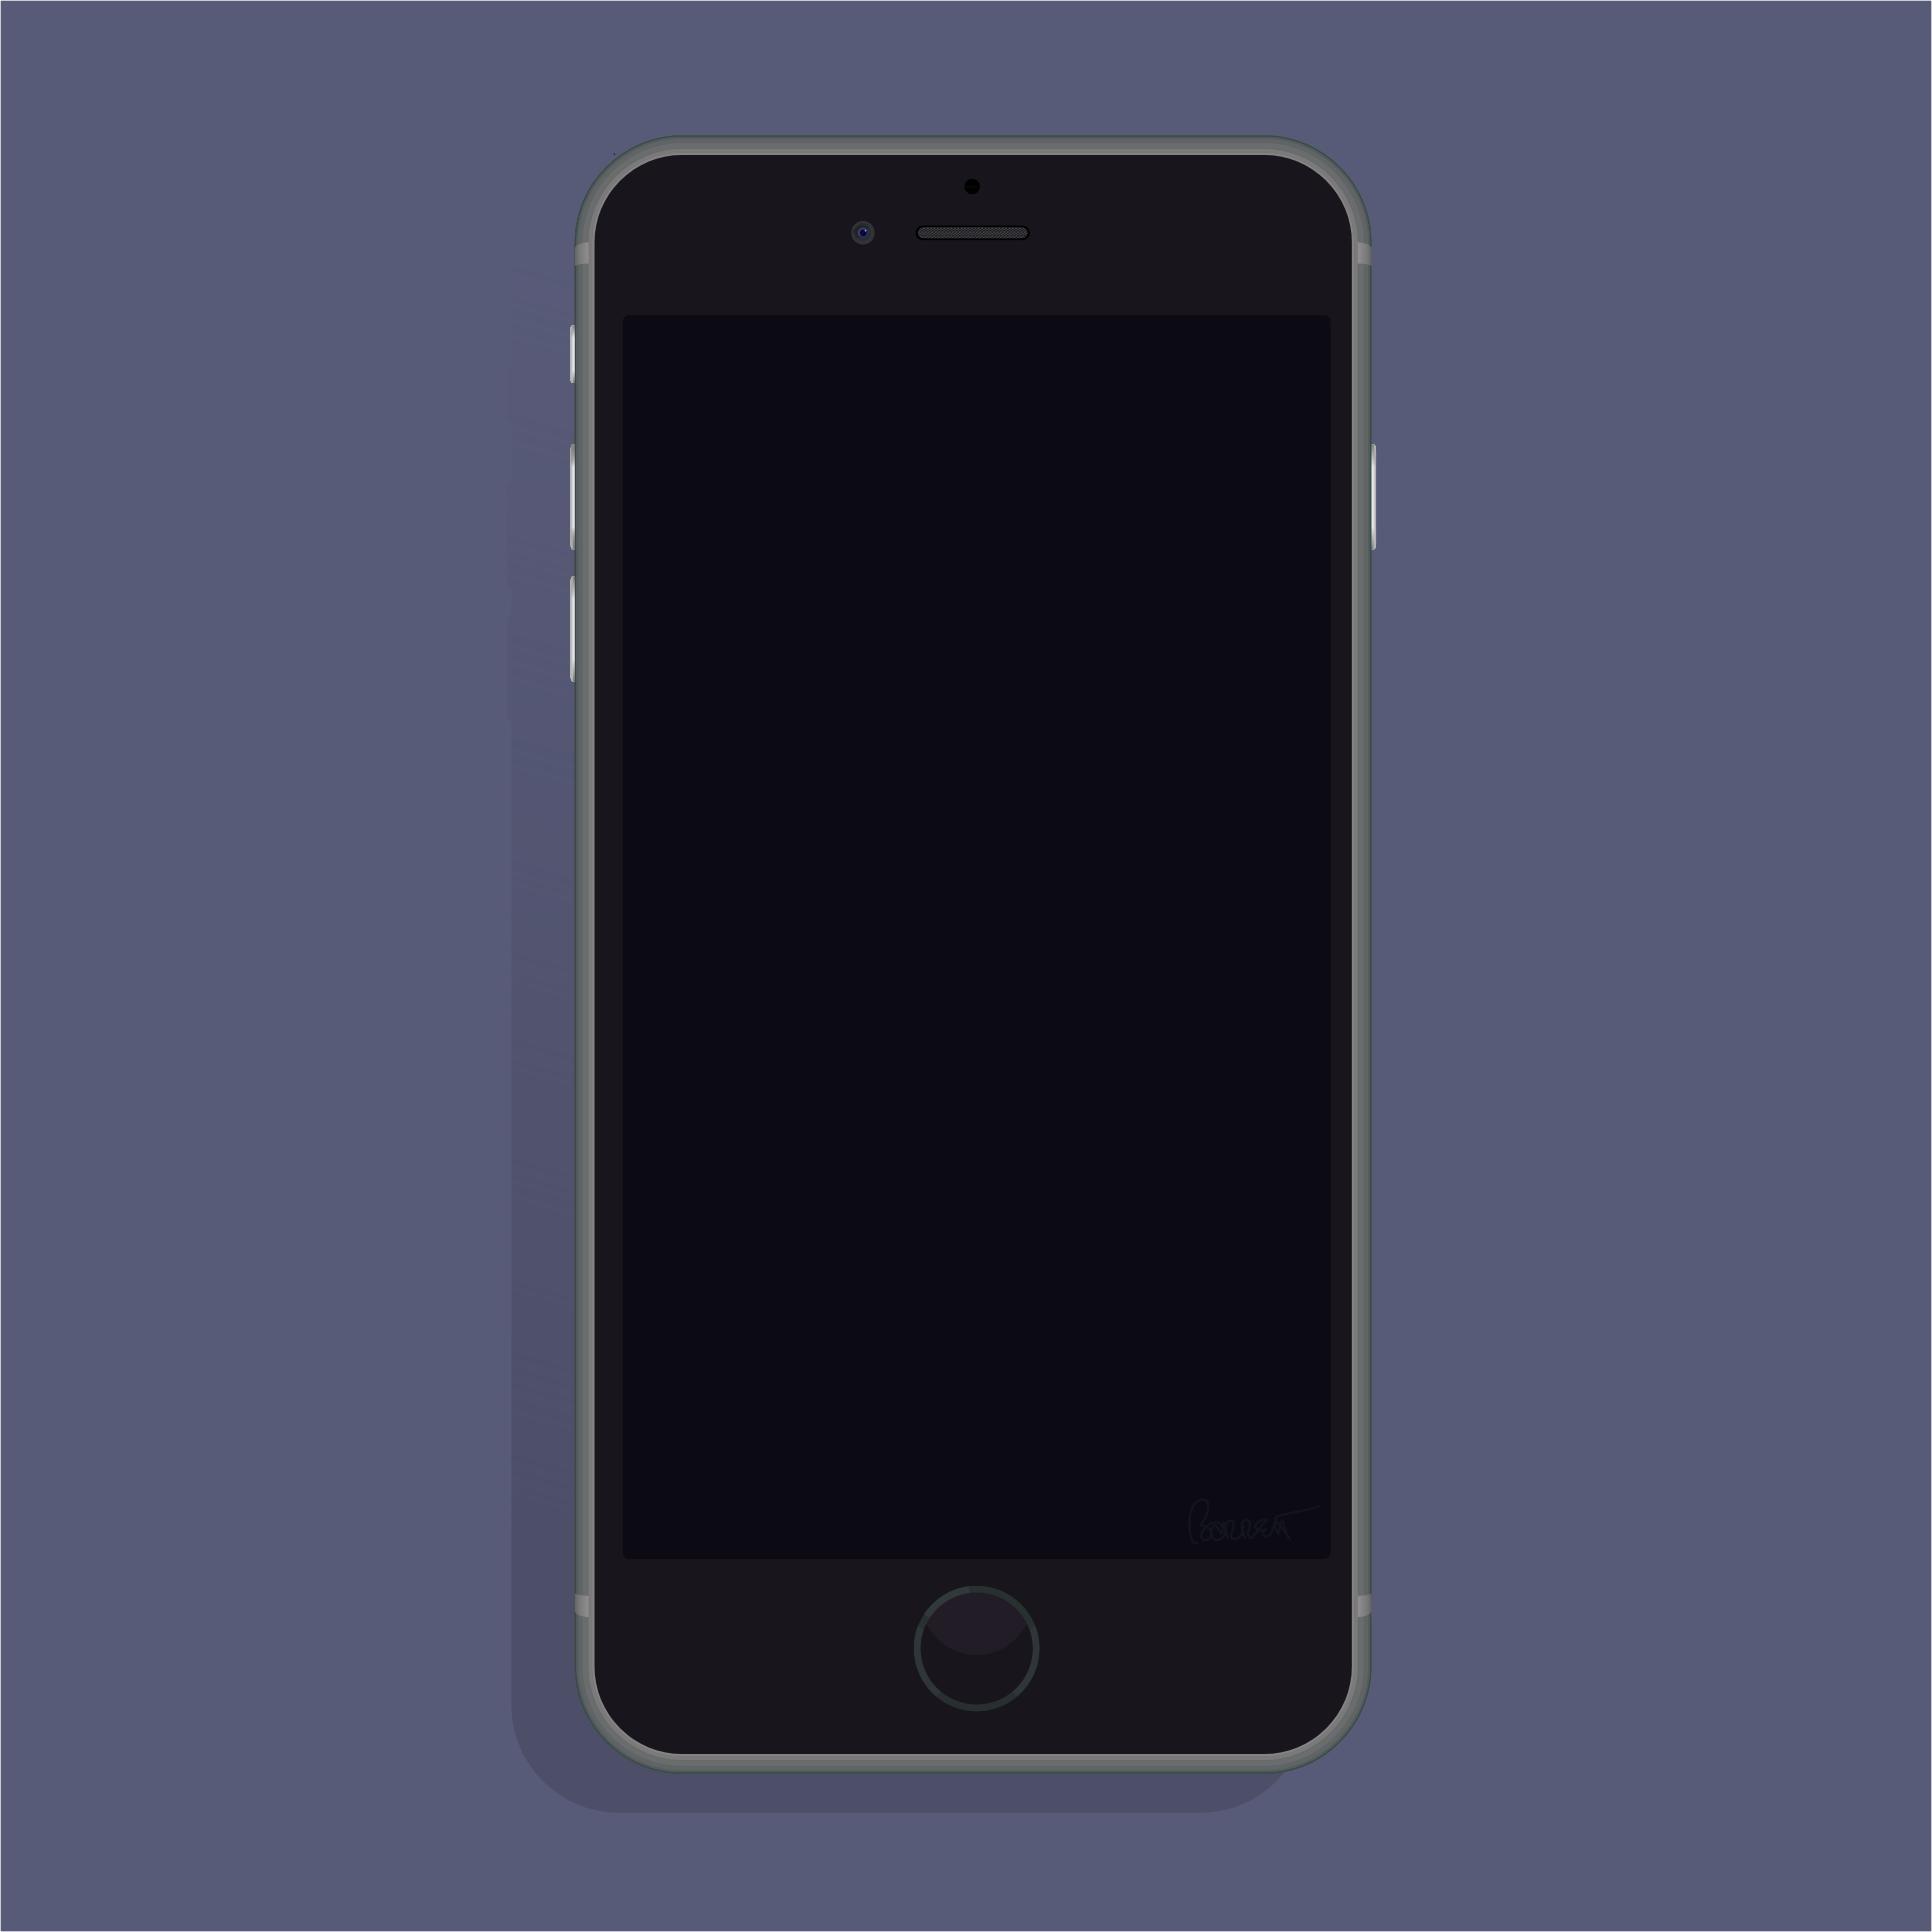 Black New iPhone 6 icons